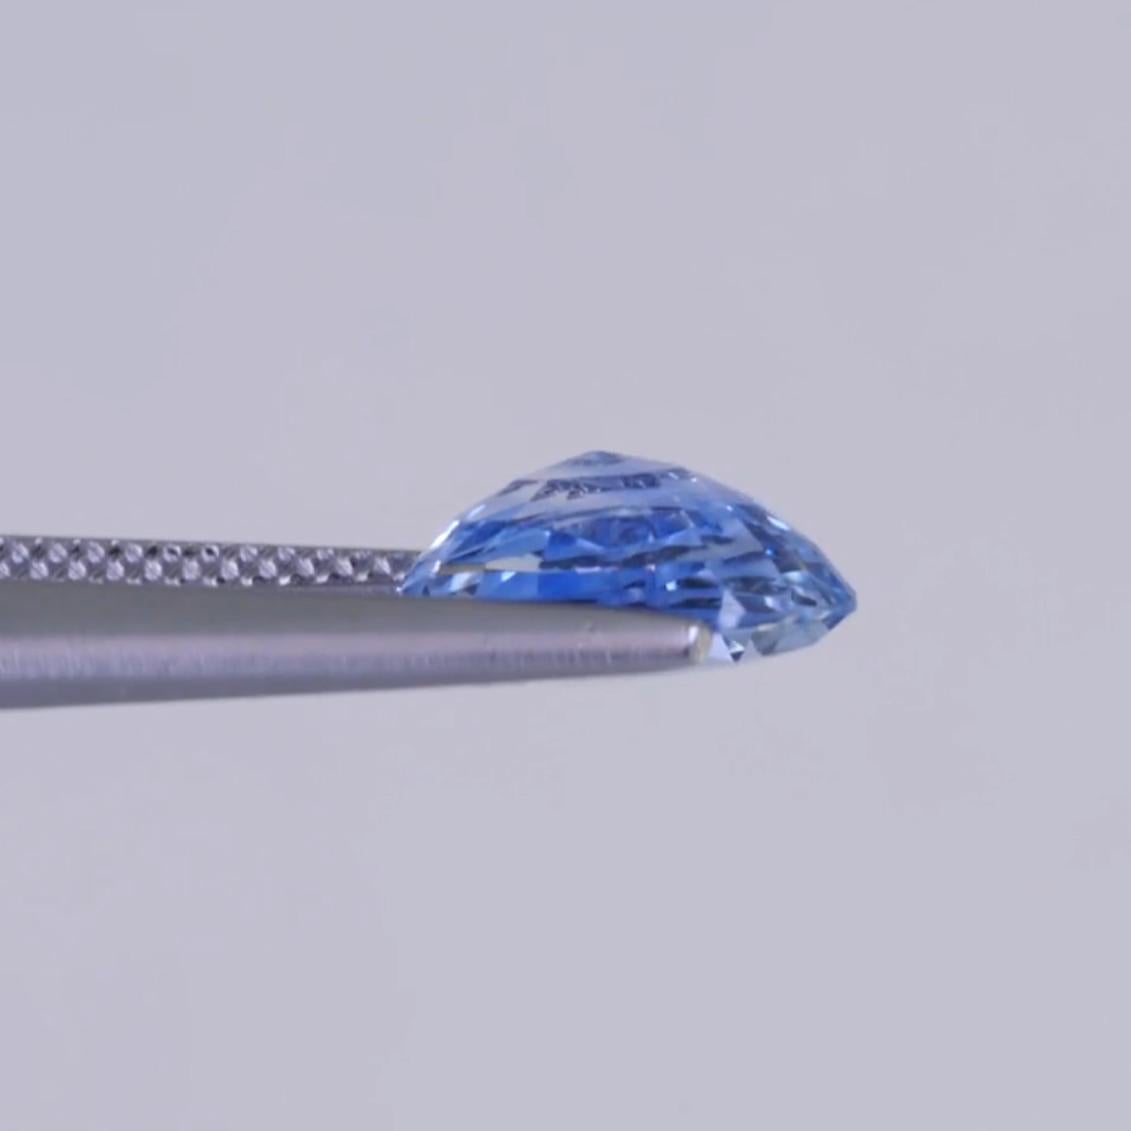 Oval Cut Bellerophon Certified 4.19ct Srilankan Blue Sapphire Natural Gemstone For Sale